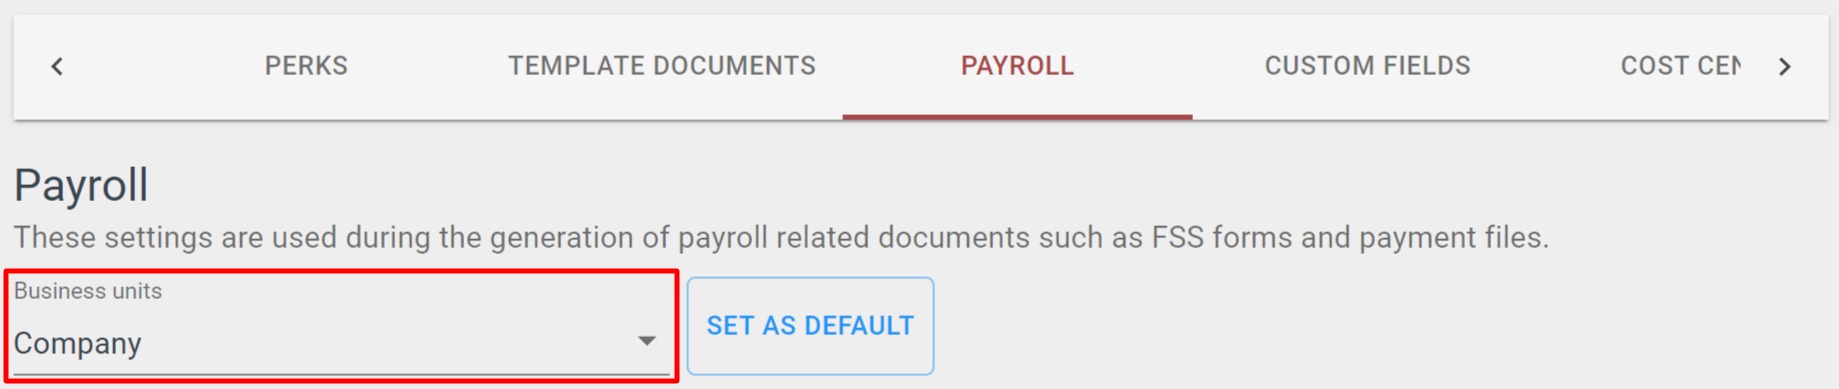 Payroll Settings BUs.jpg